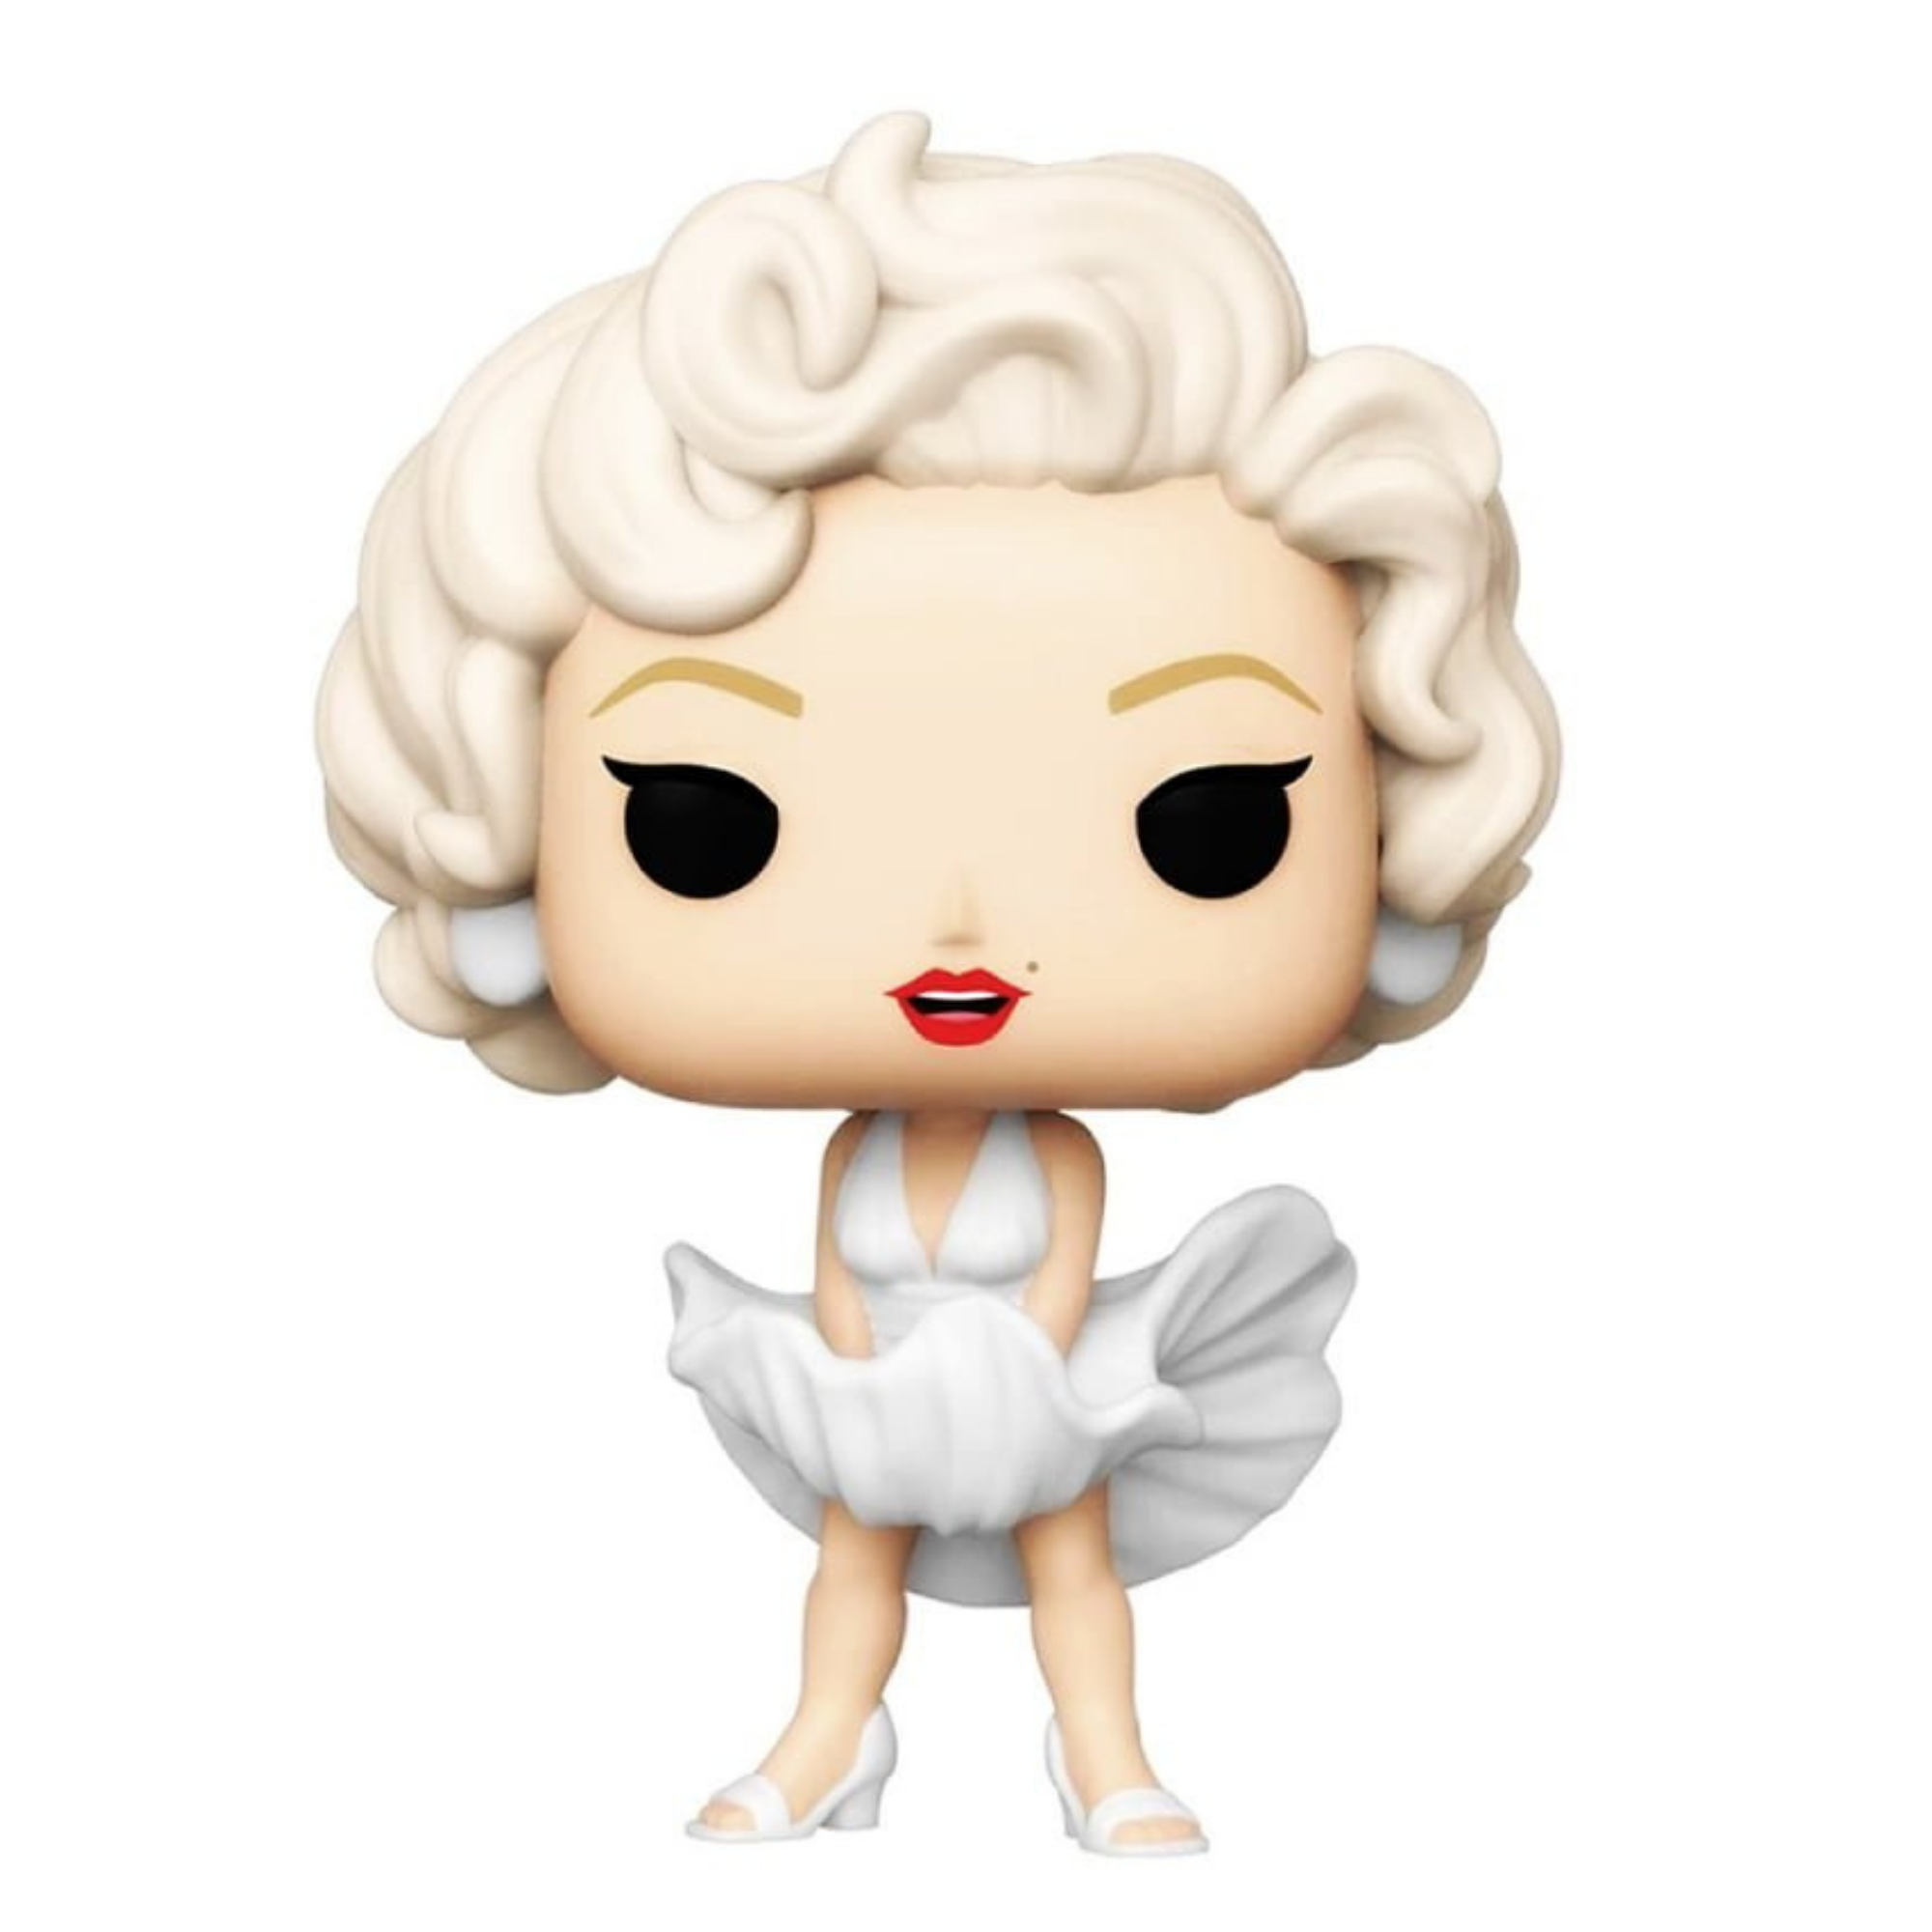 Foto de Funko Pop Icon - Marilyn Monroe 24 (vestido blanco)